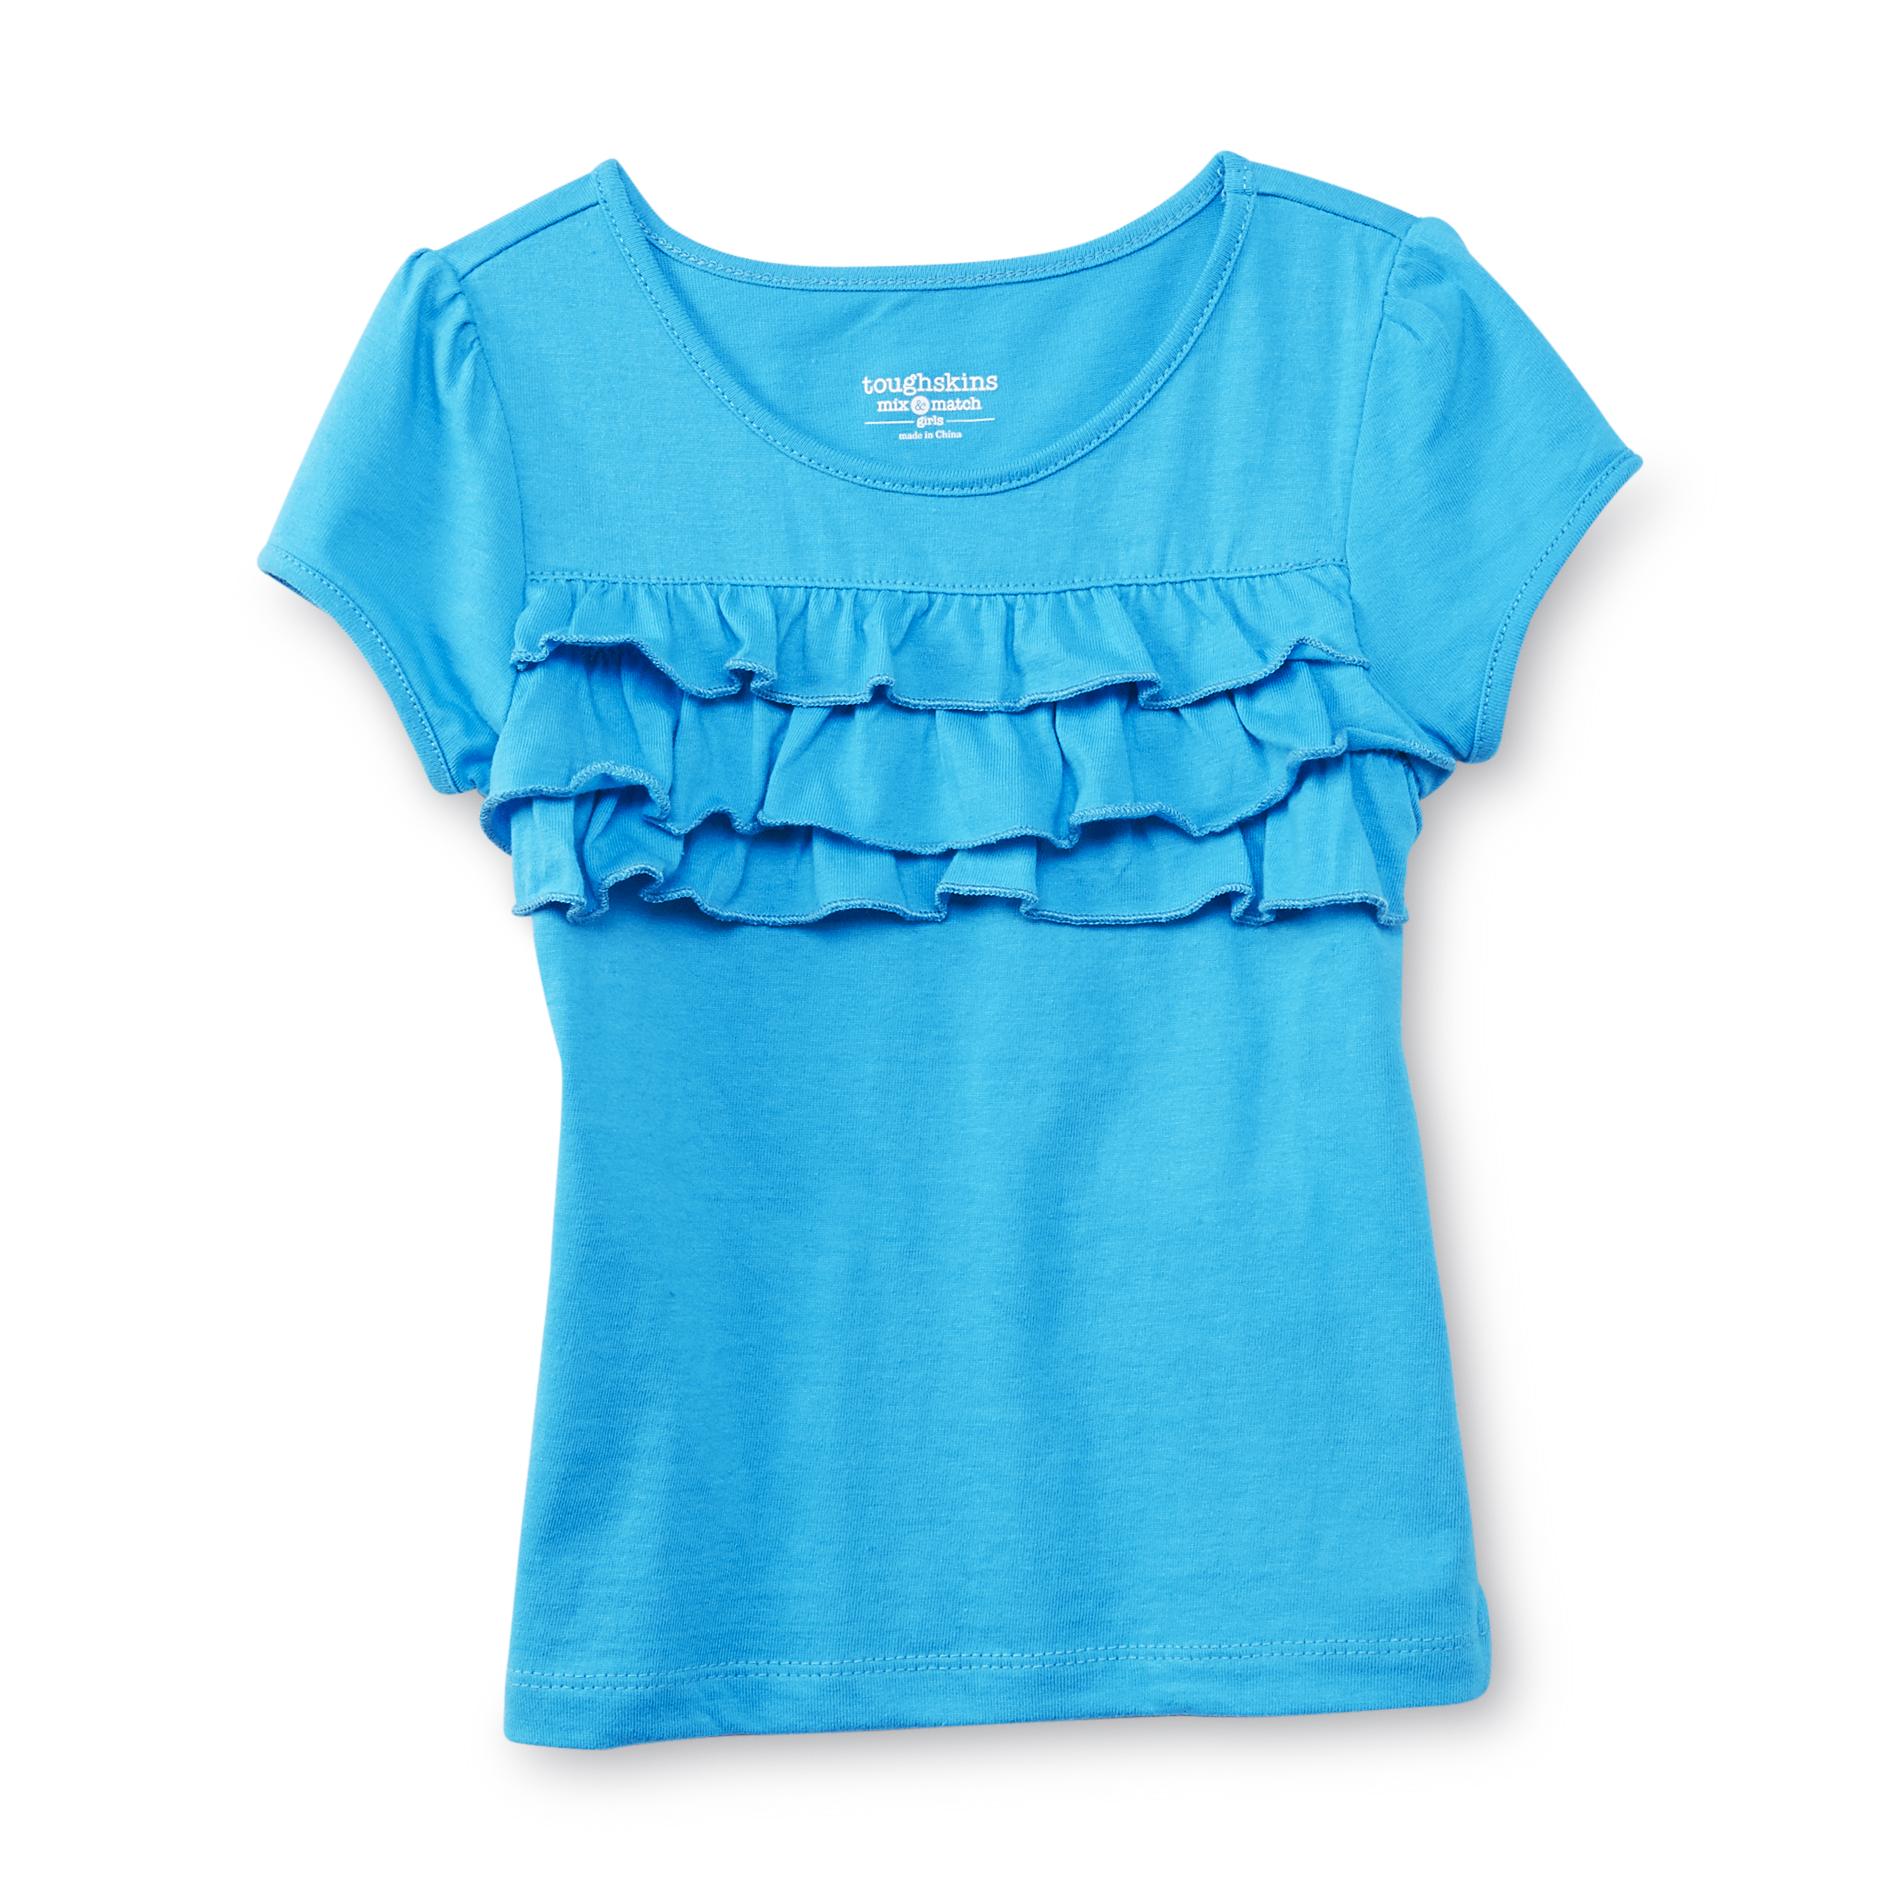 Toughskins Infant & Toddler Girl's Ruffle T-Shirt